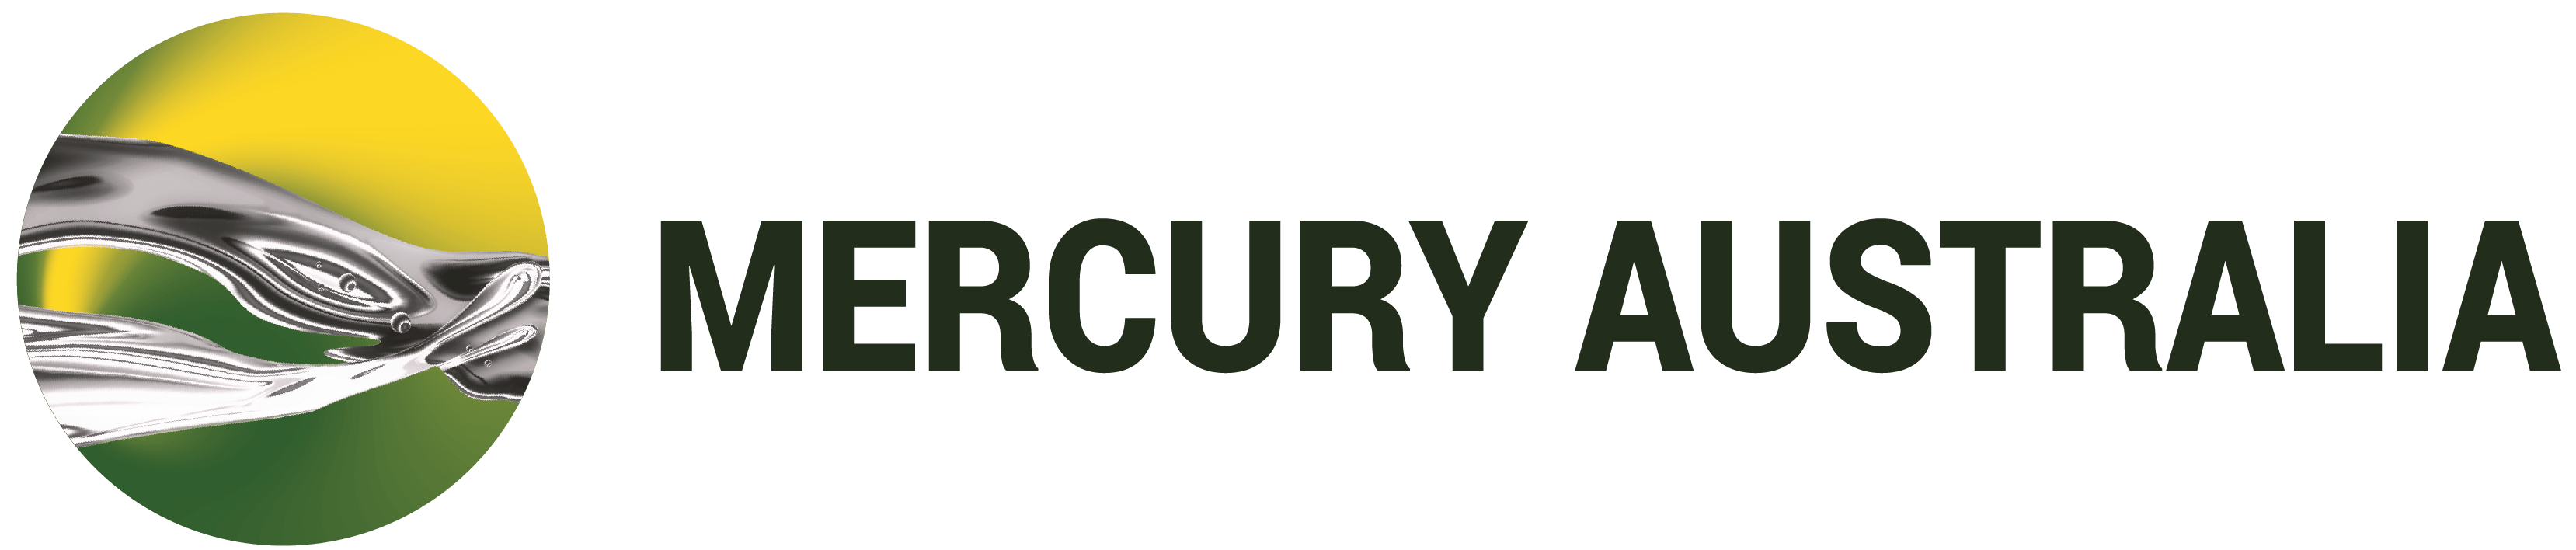 Mercury Australia